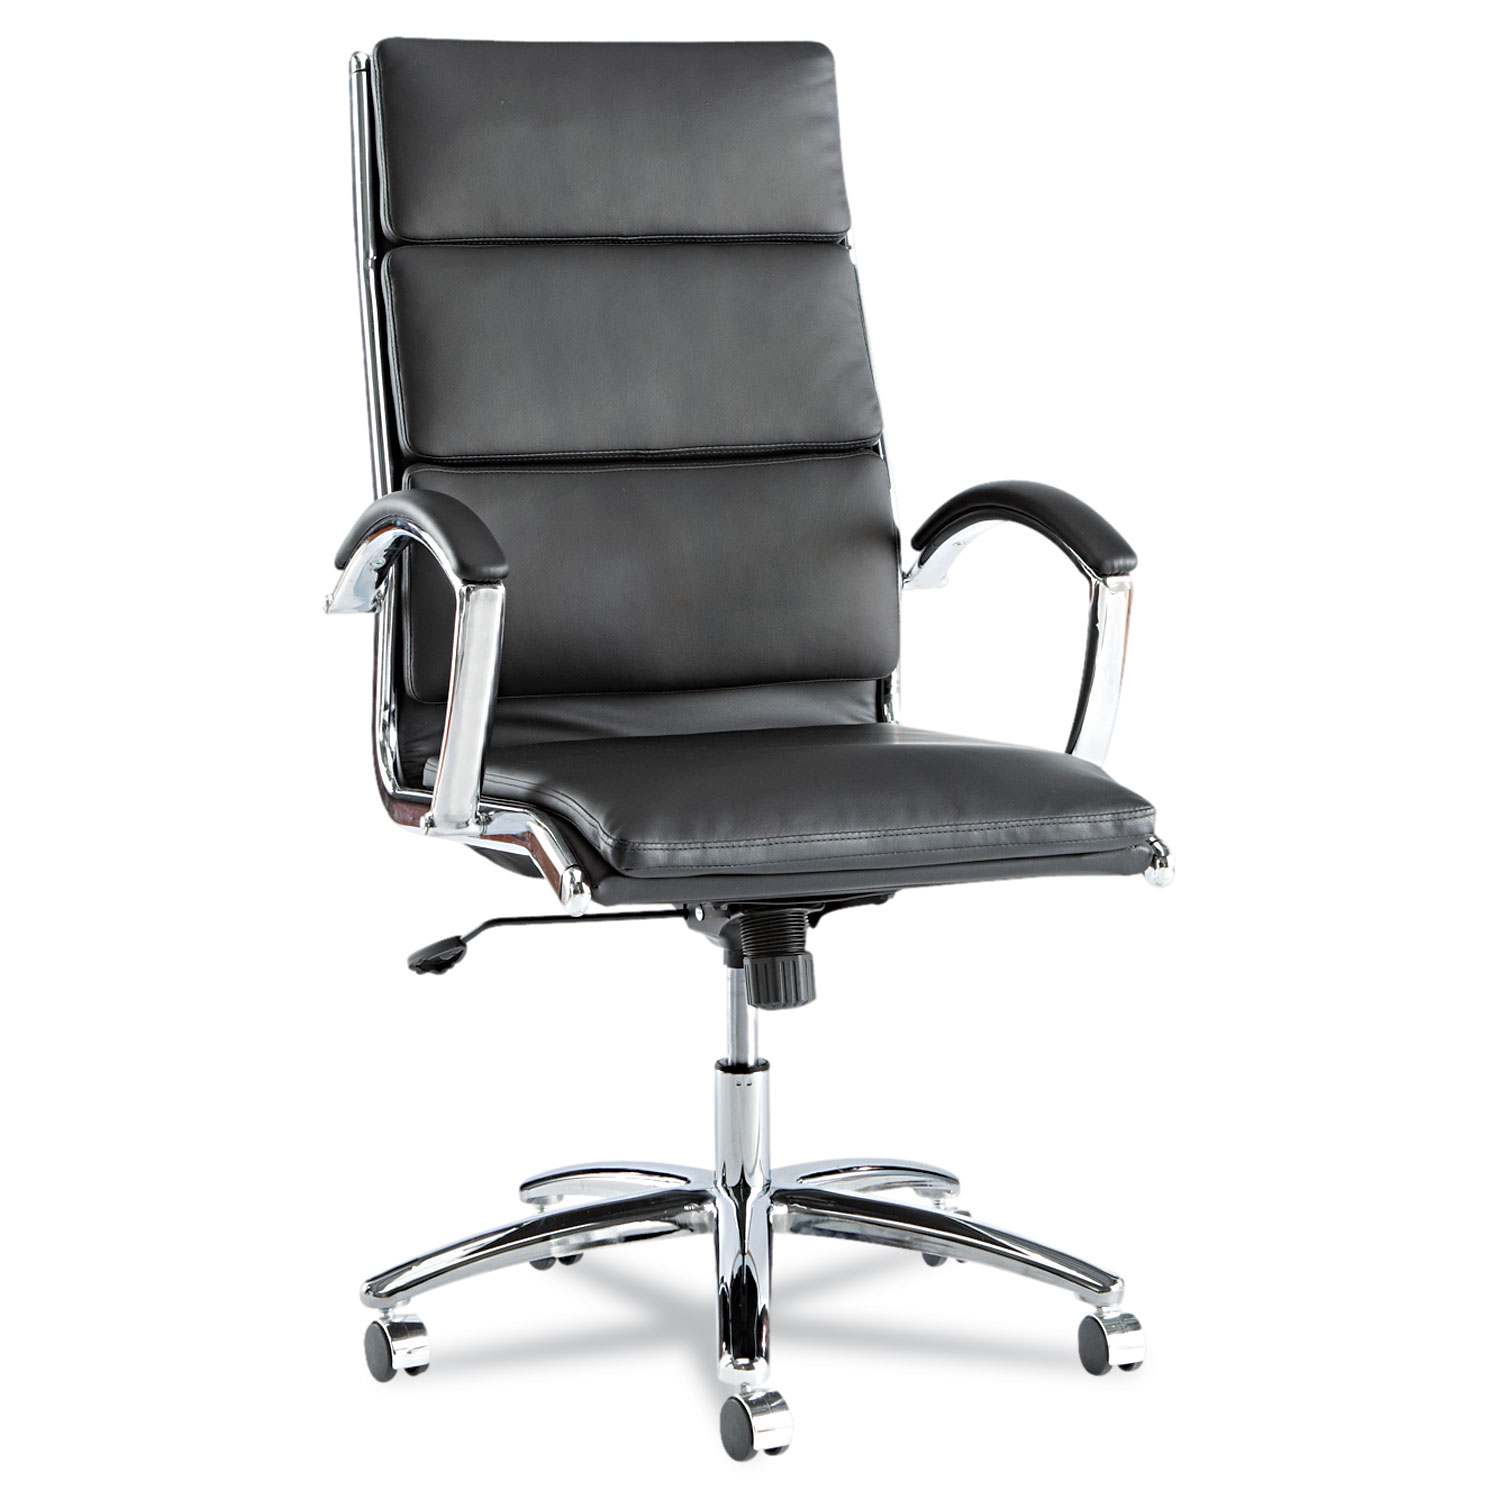  Alera ALENR4119 Alera Neratoli High-Back Slim Profile Chair, Supports up to 275 lbs., Black Seat/Black Back, Chrome Base (ALENR4119) 